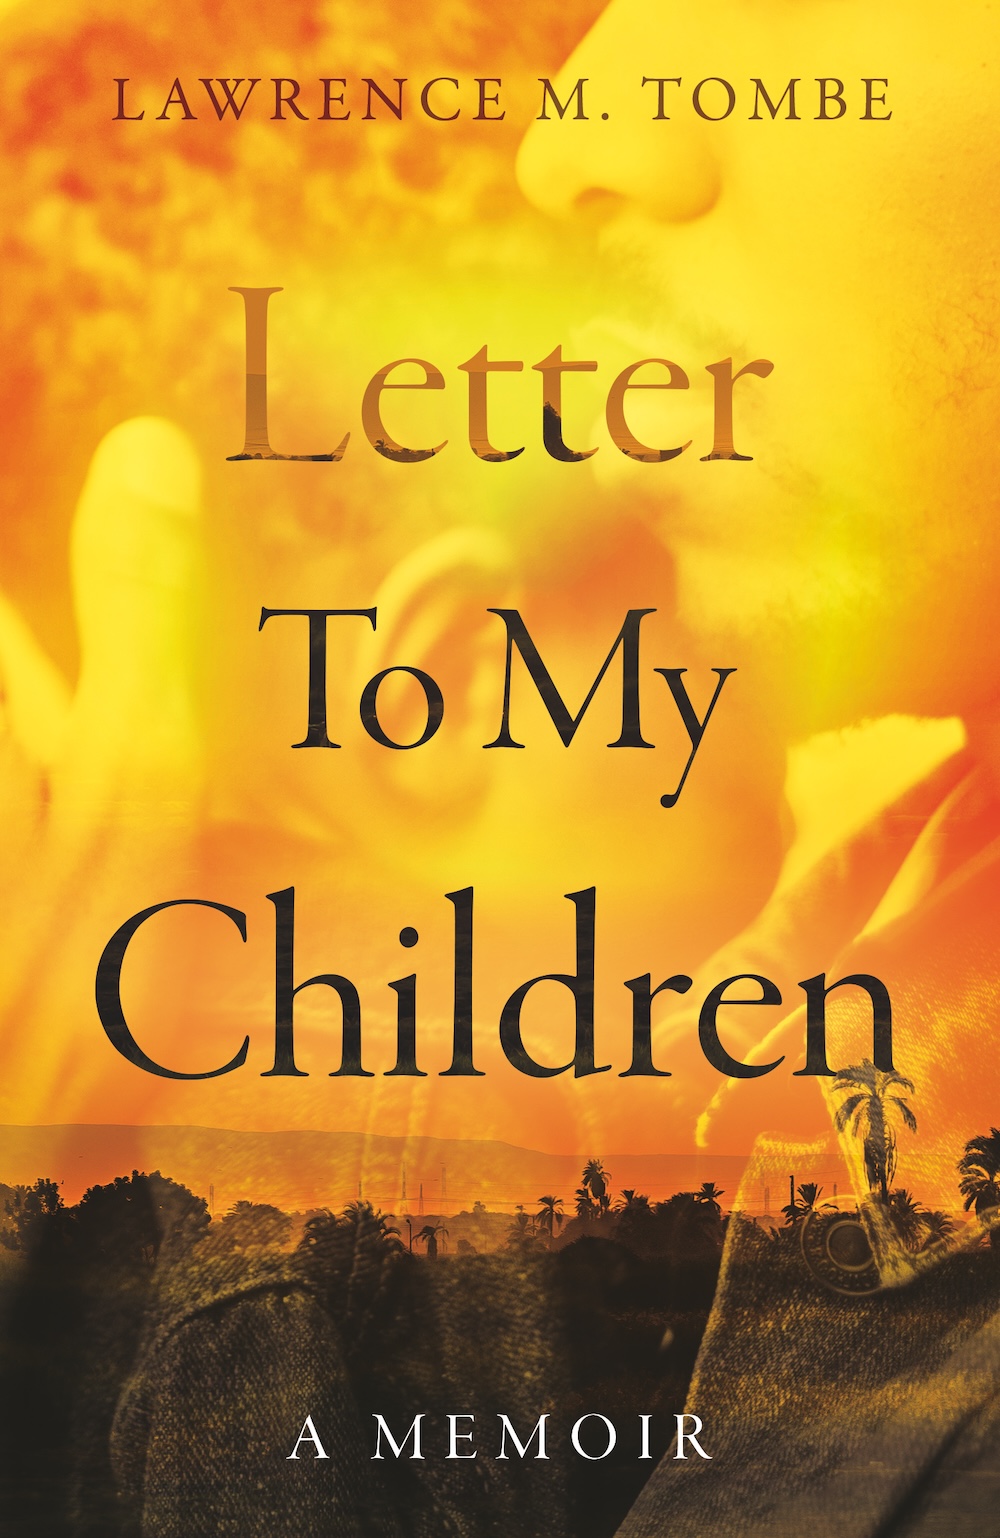 Letter To My Children - A Memoir